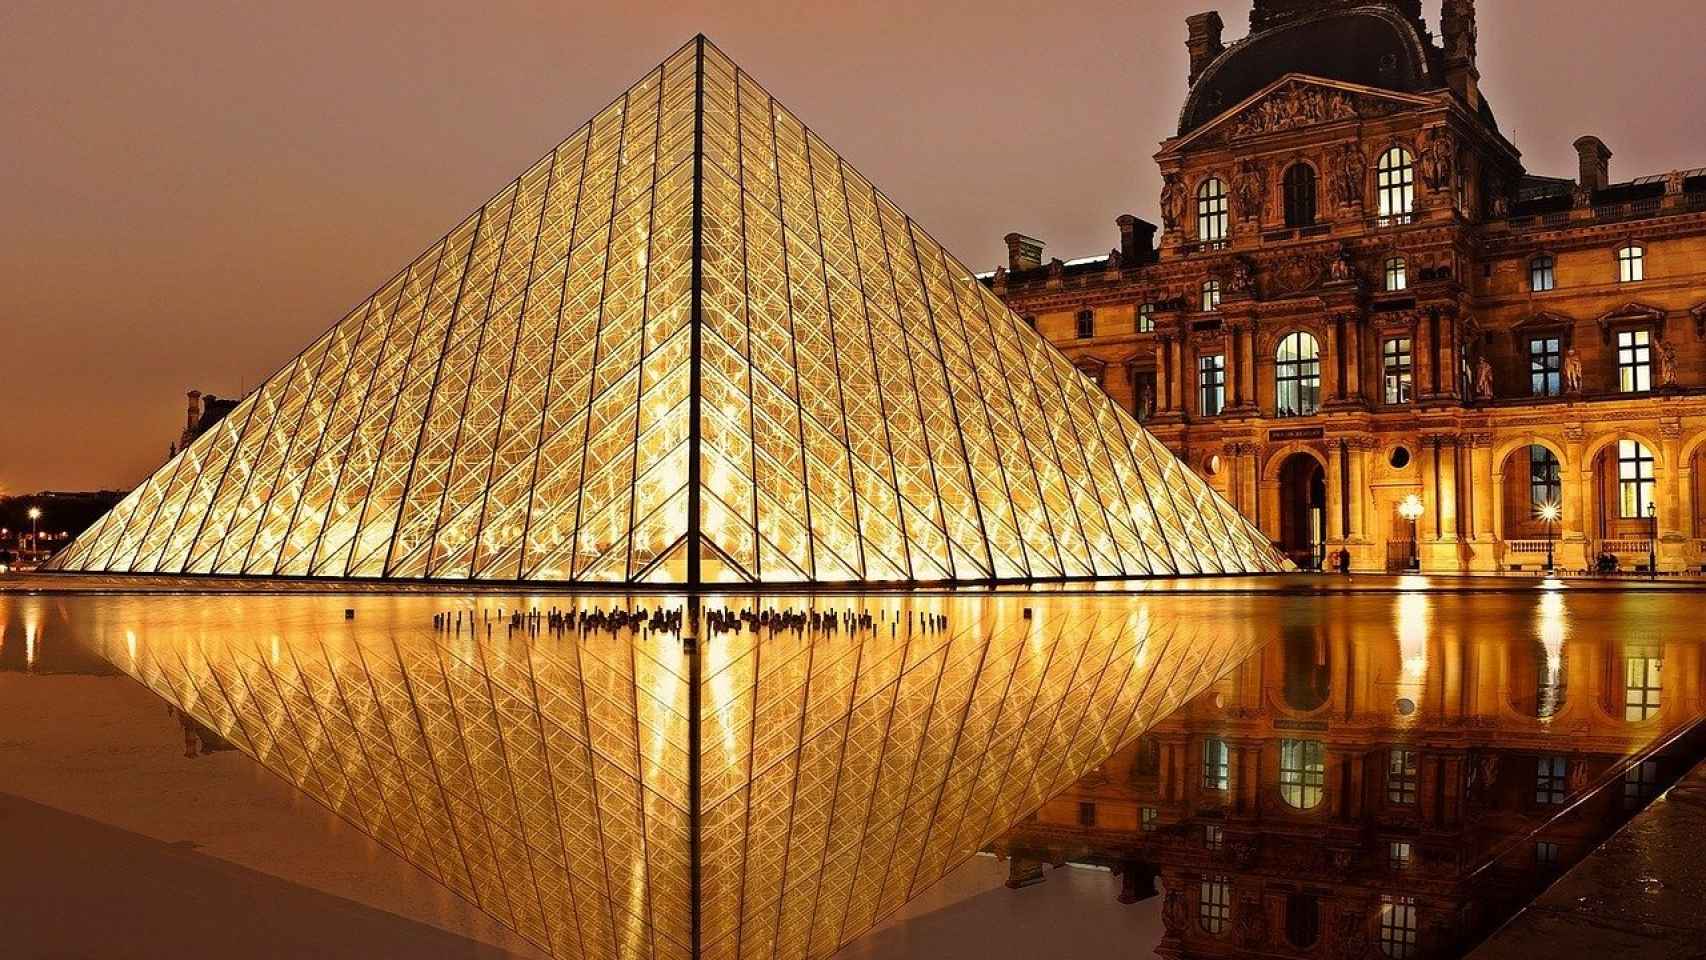 Museo del Louvre.